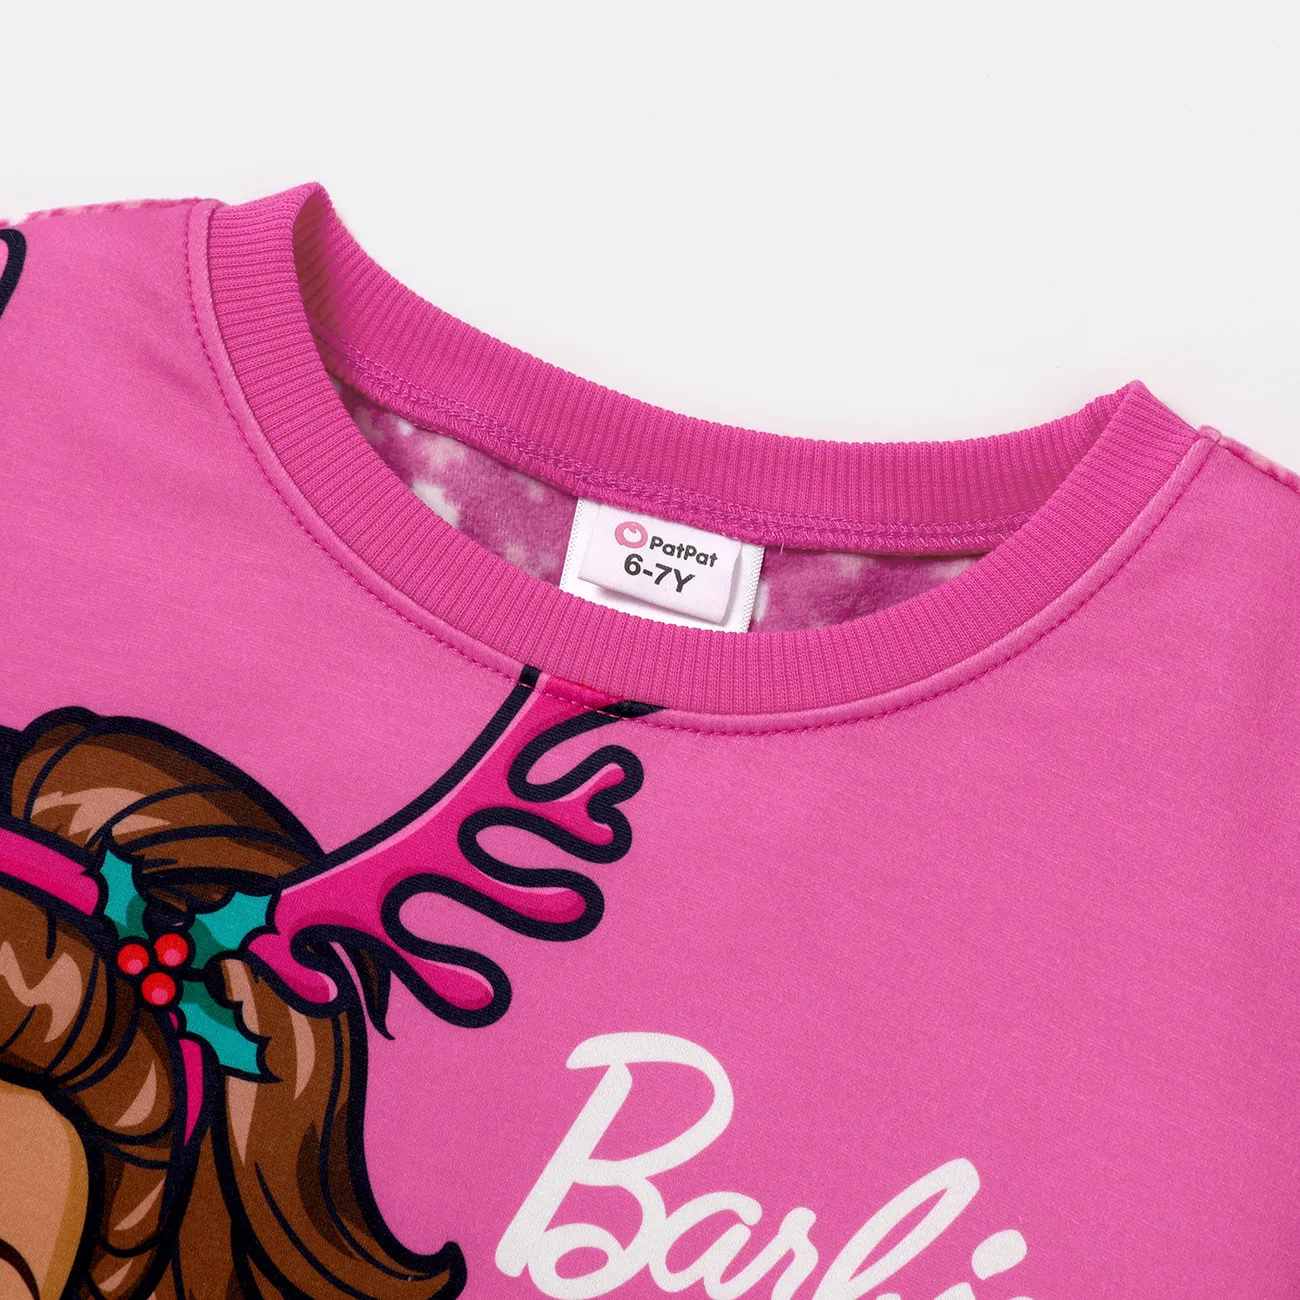 Barbie Criança Menina Personagens Pullover Sweatshirt Rosa big image 1